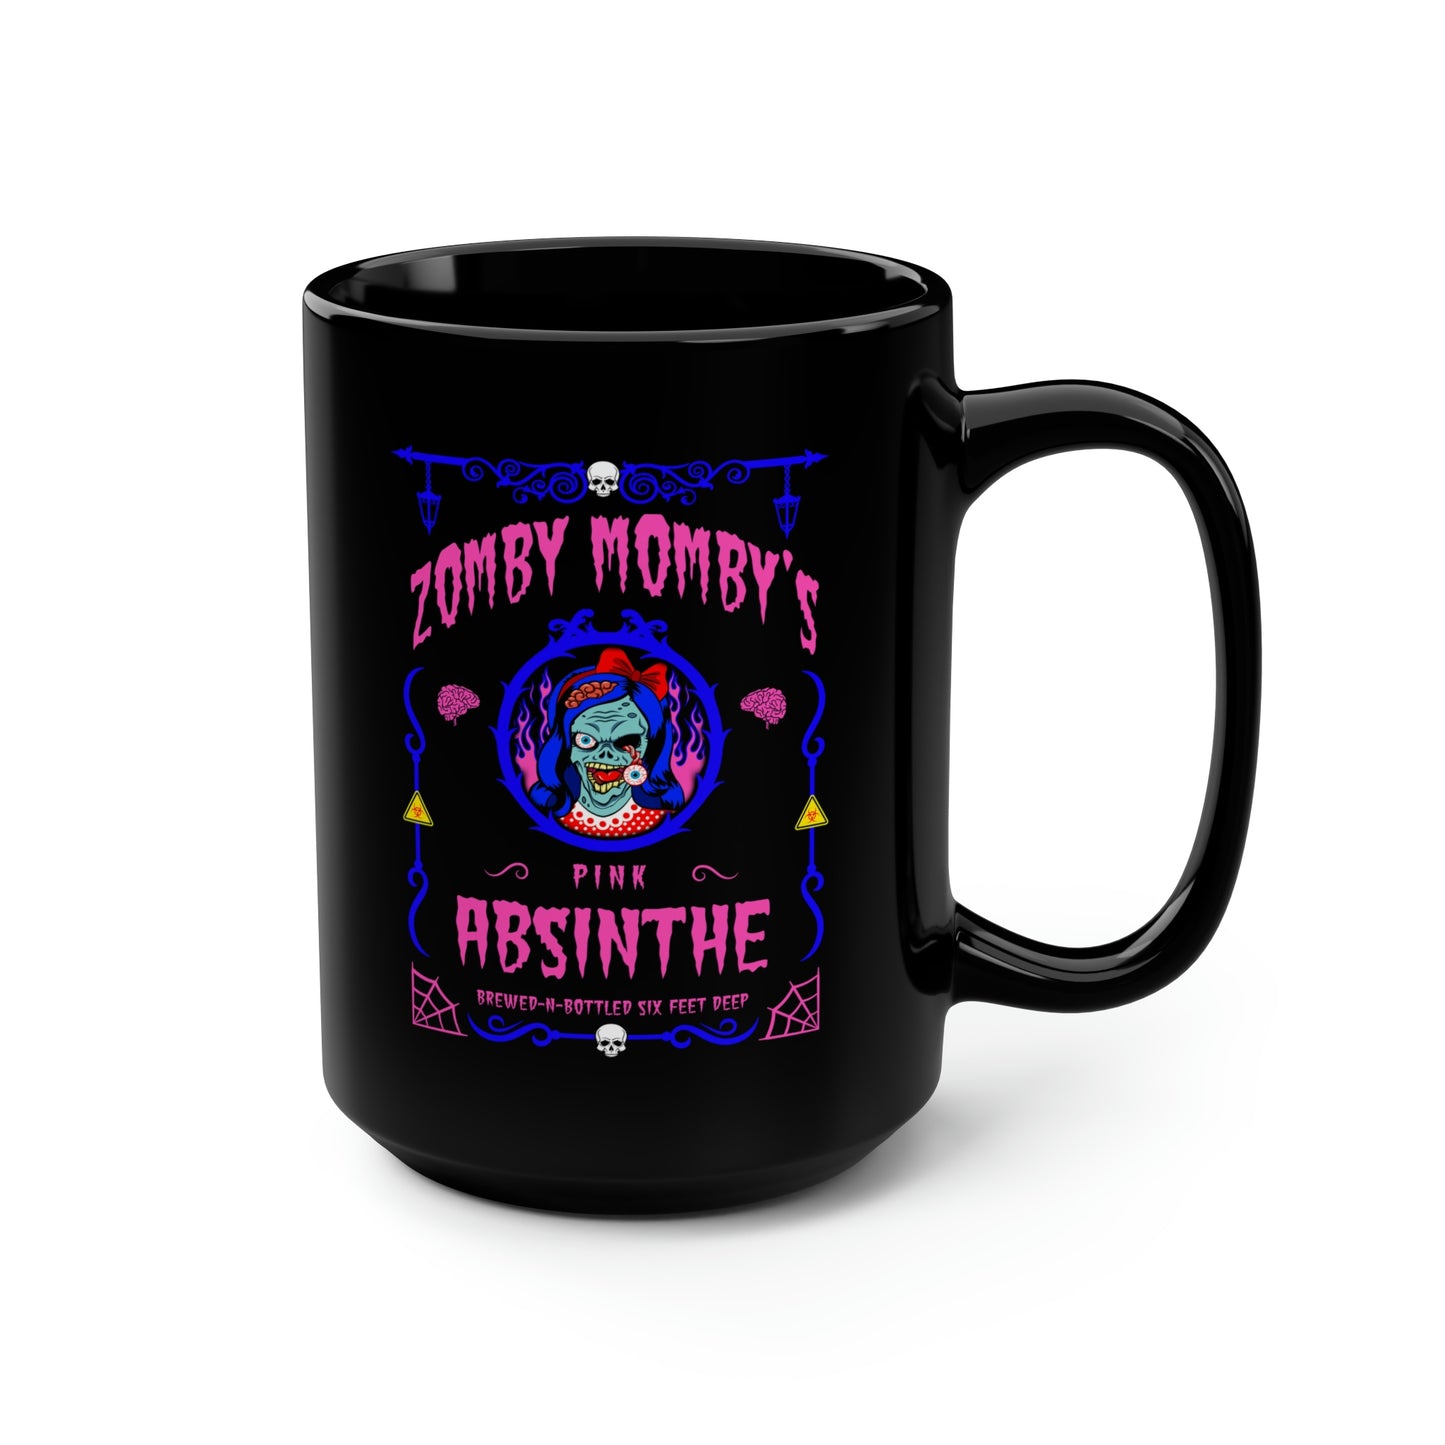 ABSINTHE MONSTERS 12 (ZOMBY MOMBY) Black Mug, 15oz